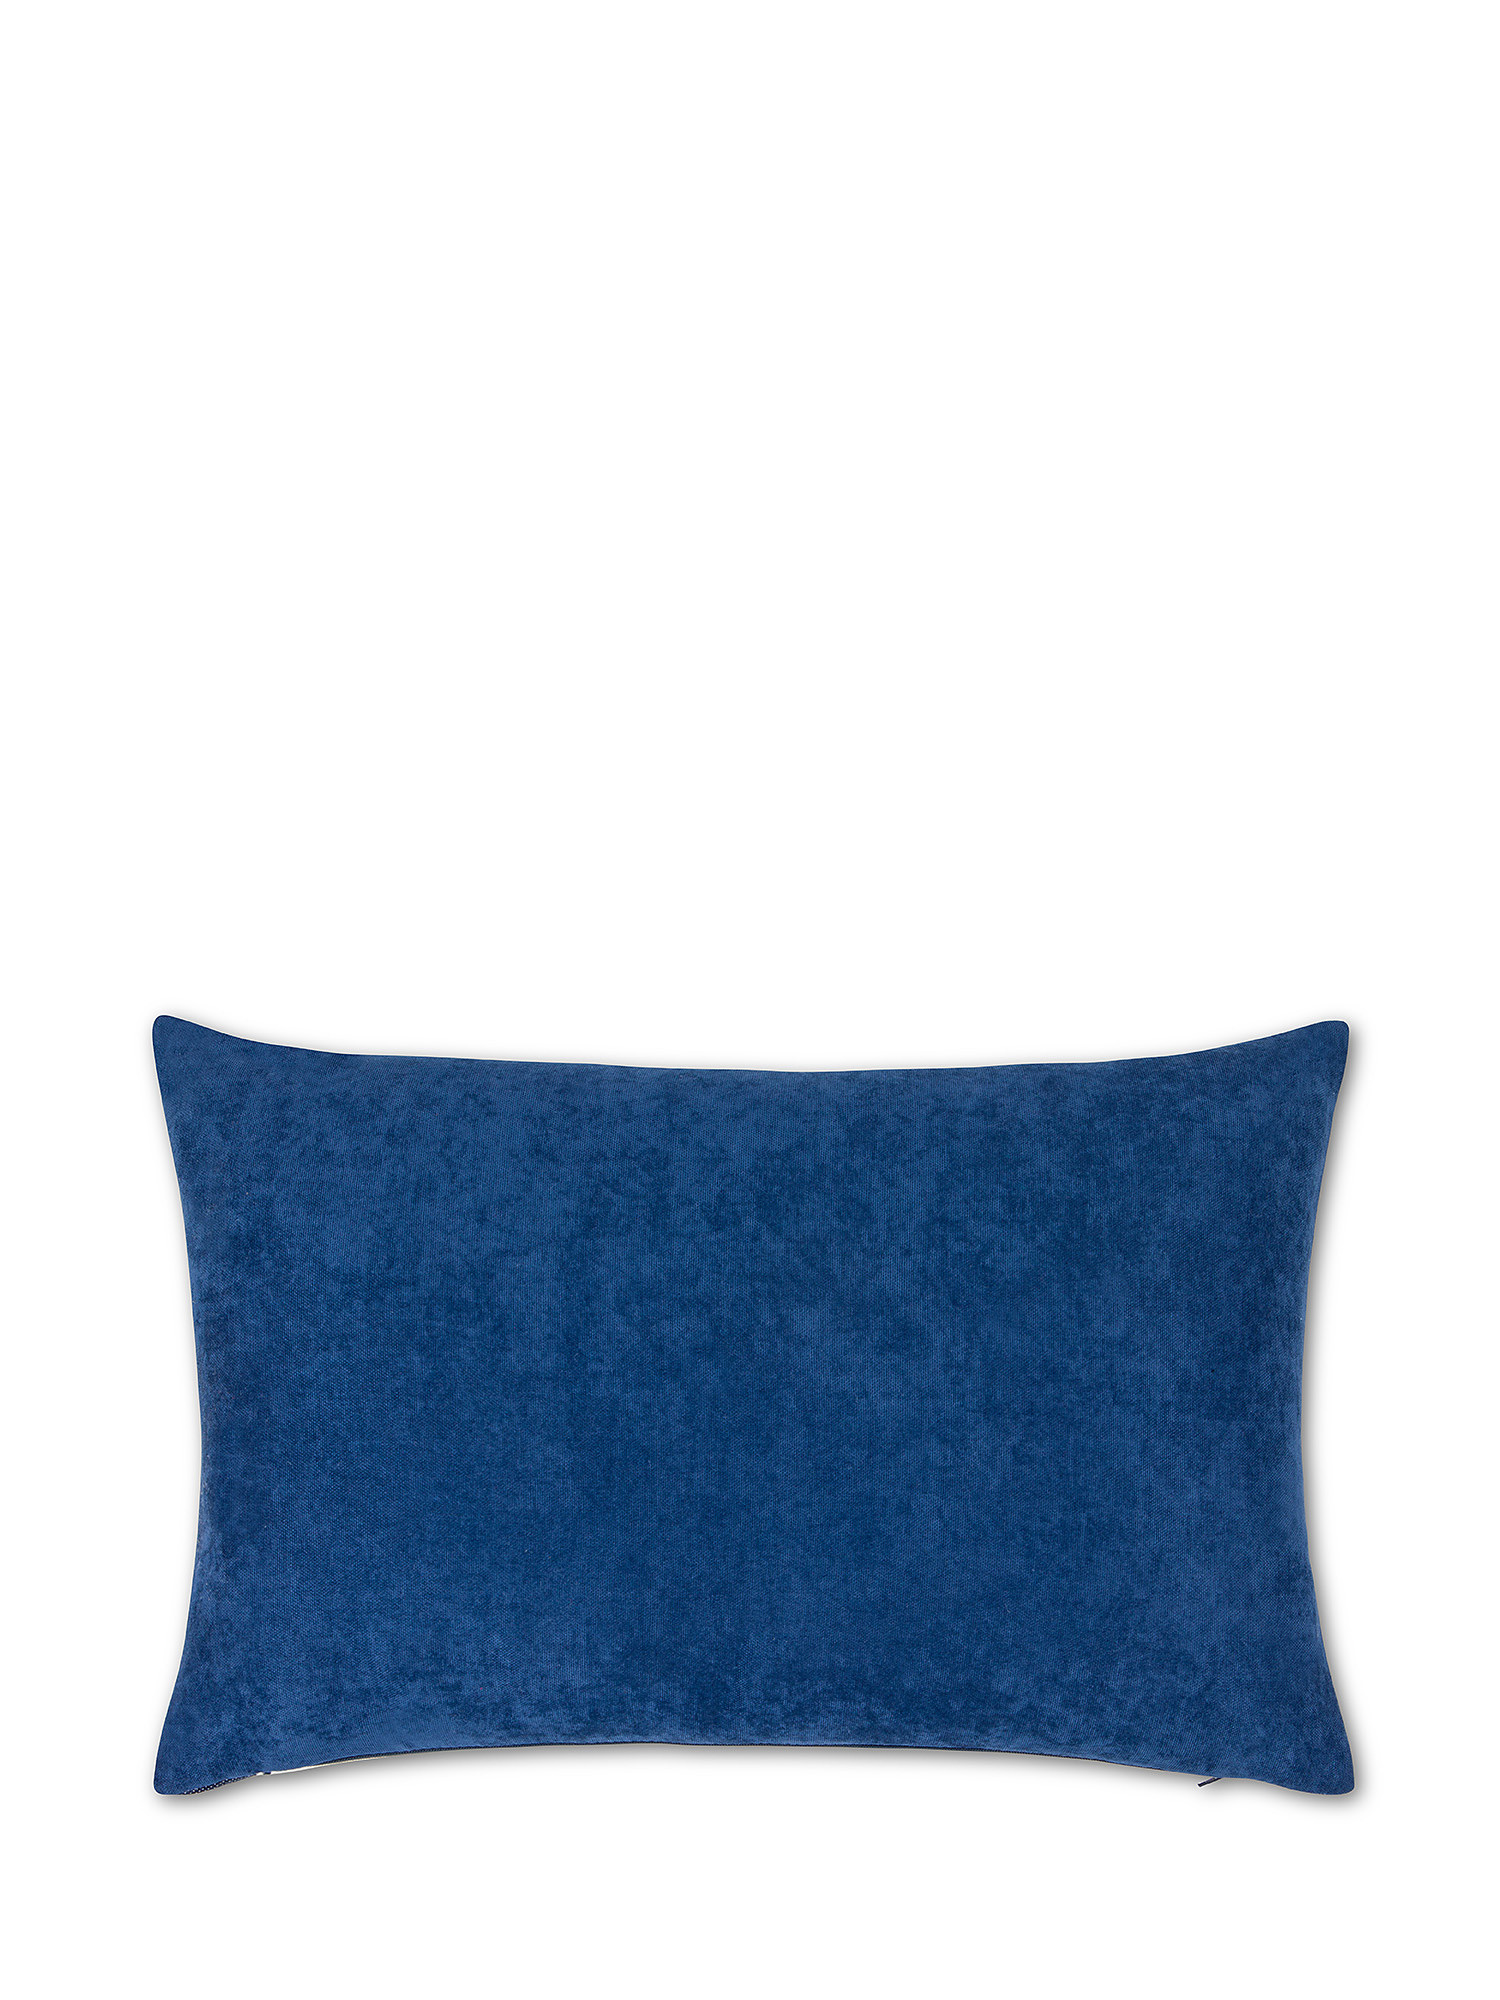 Cuscino 35x55 cm in cotone e lino, Bianco/Blu, large image number 1